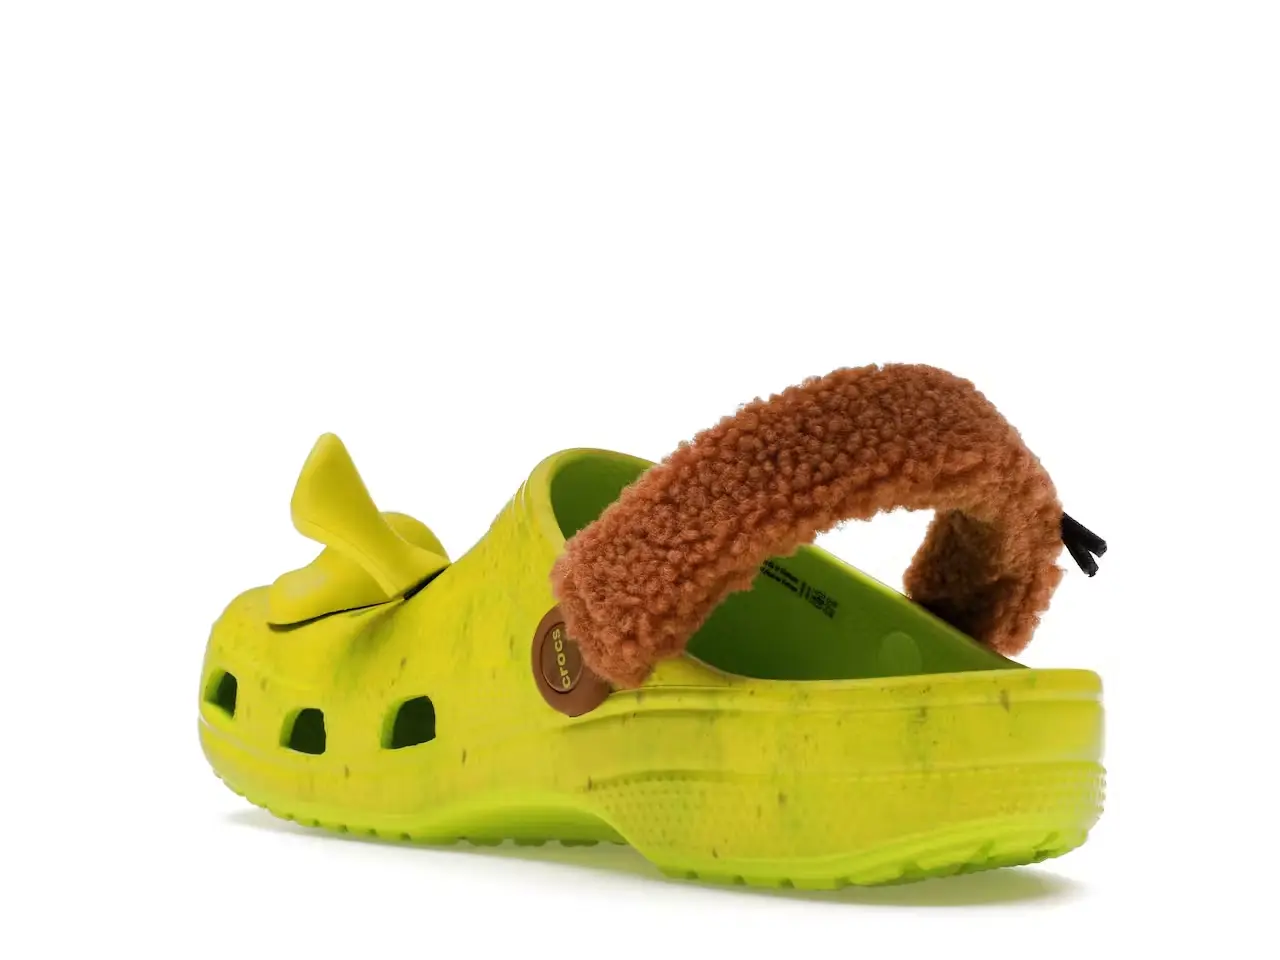 Crocs Classic Clog x Shrek 'DreamWorks' - 209373-3TX - Restocks